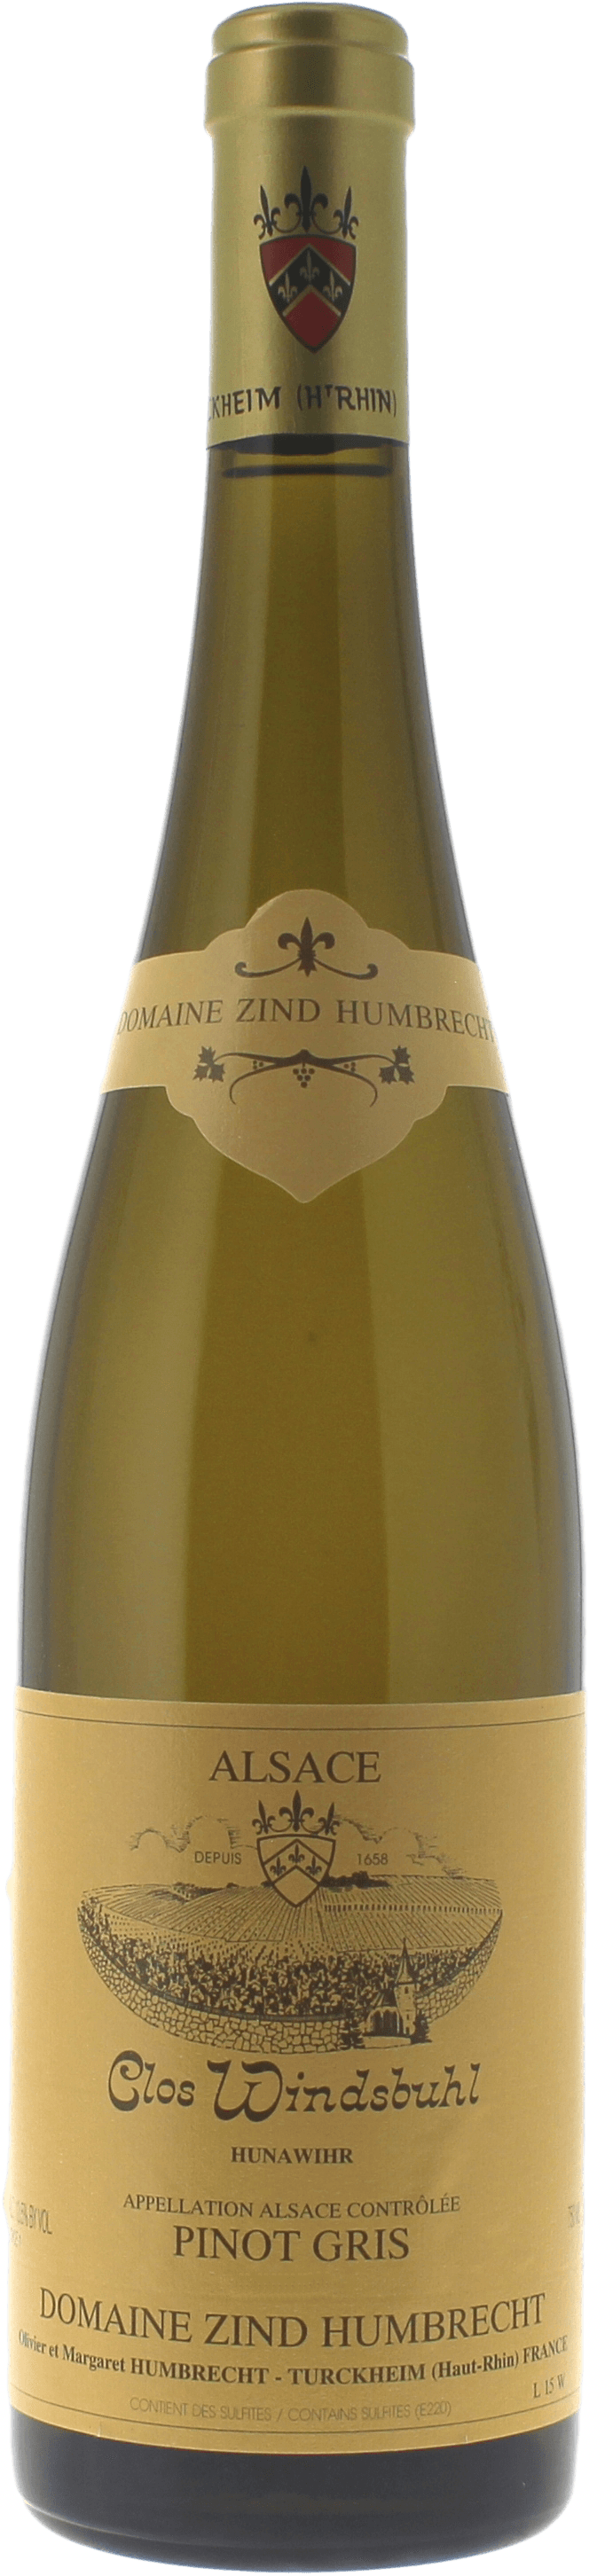 Pinot gris clos windsbuhl domaine zind humbrecht 2018  Zind Humbrecht, Alsace